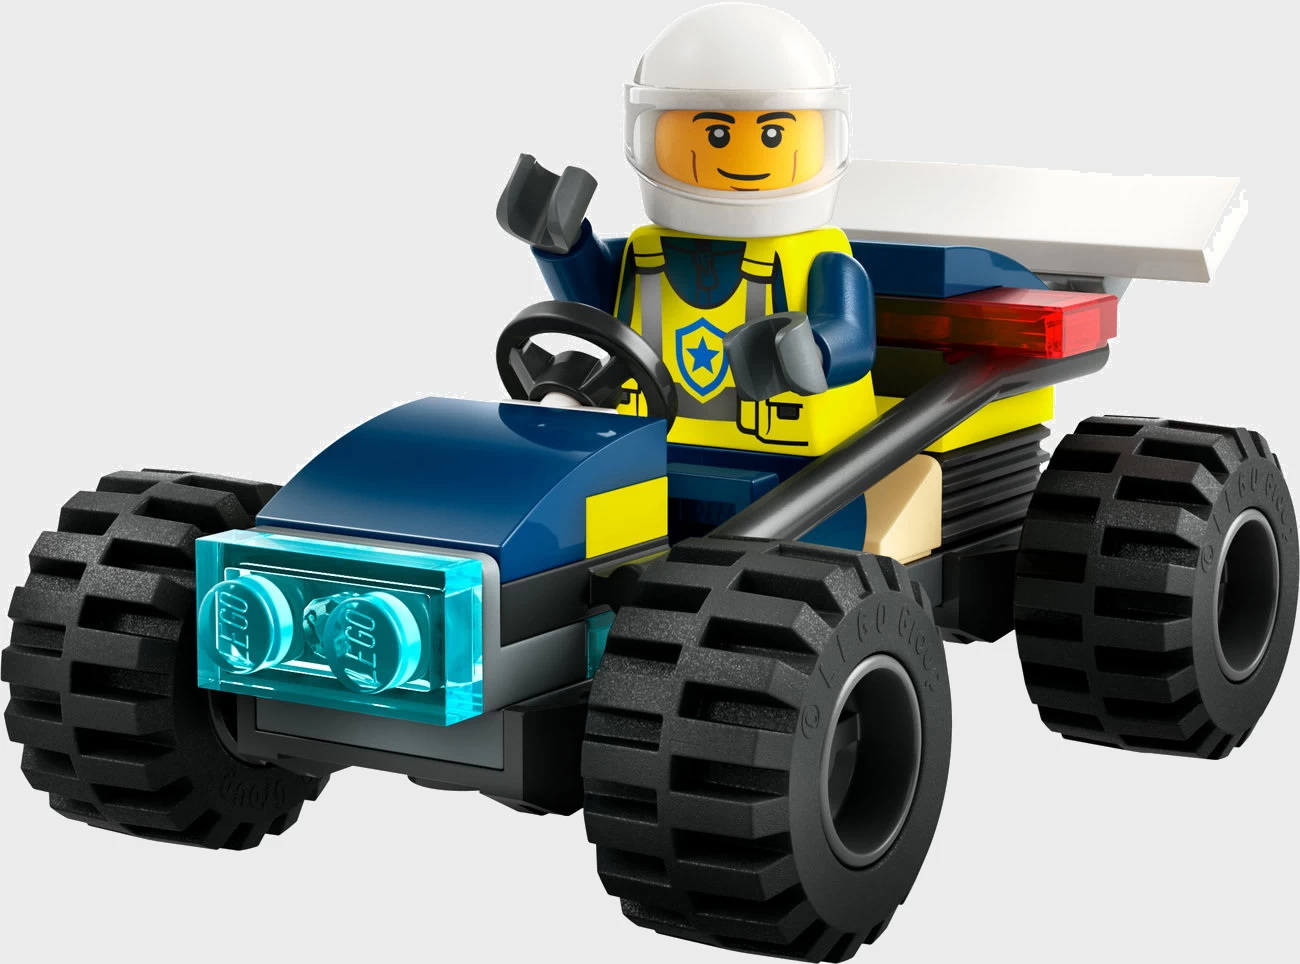 LEGO City 30664 - Polizei-Geländebuggy Polybag